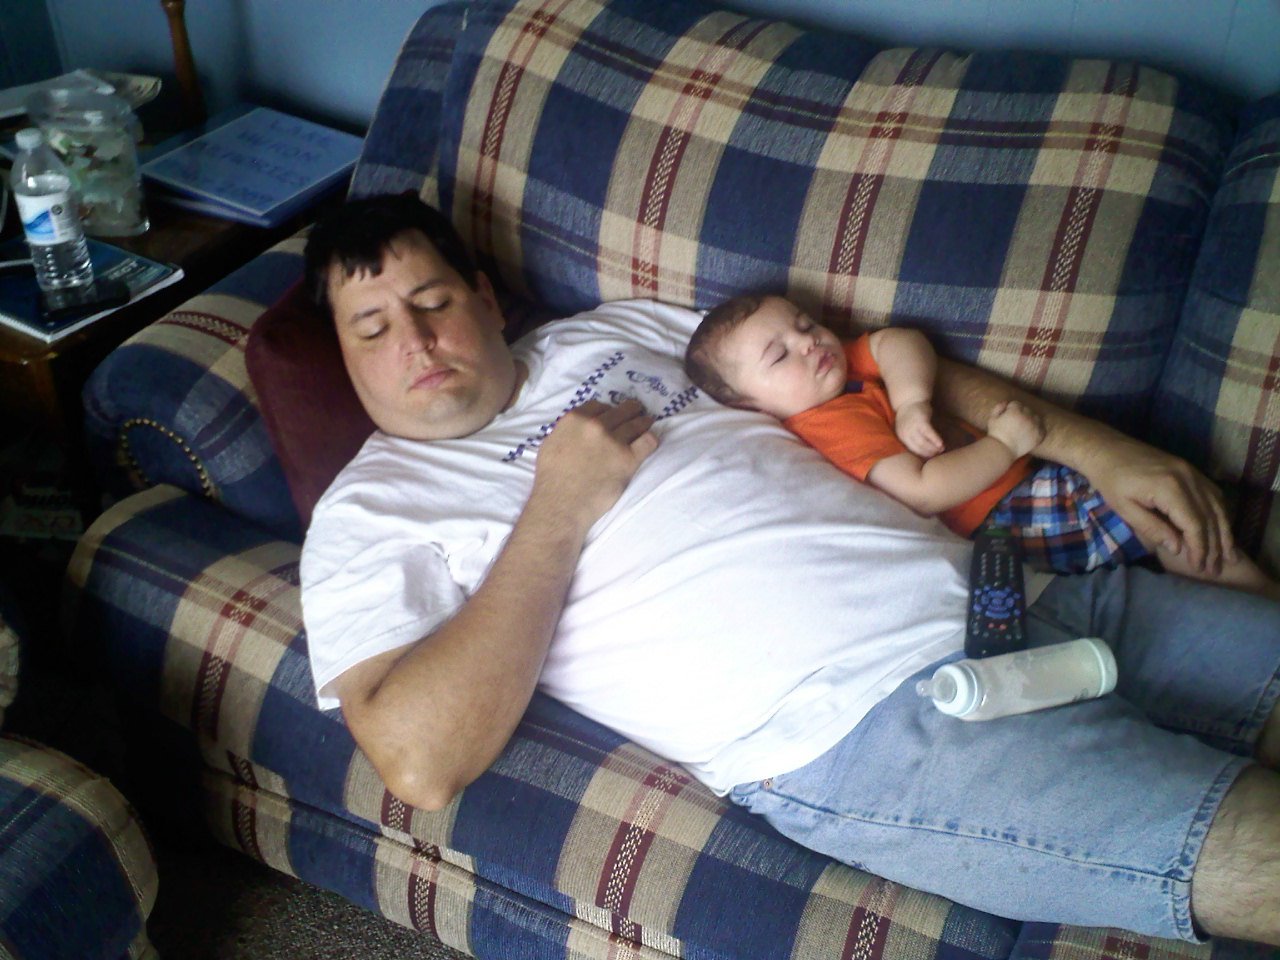 My husband and son asleep